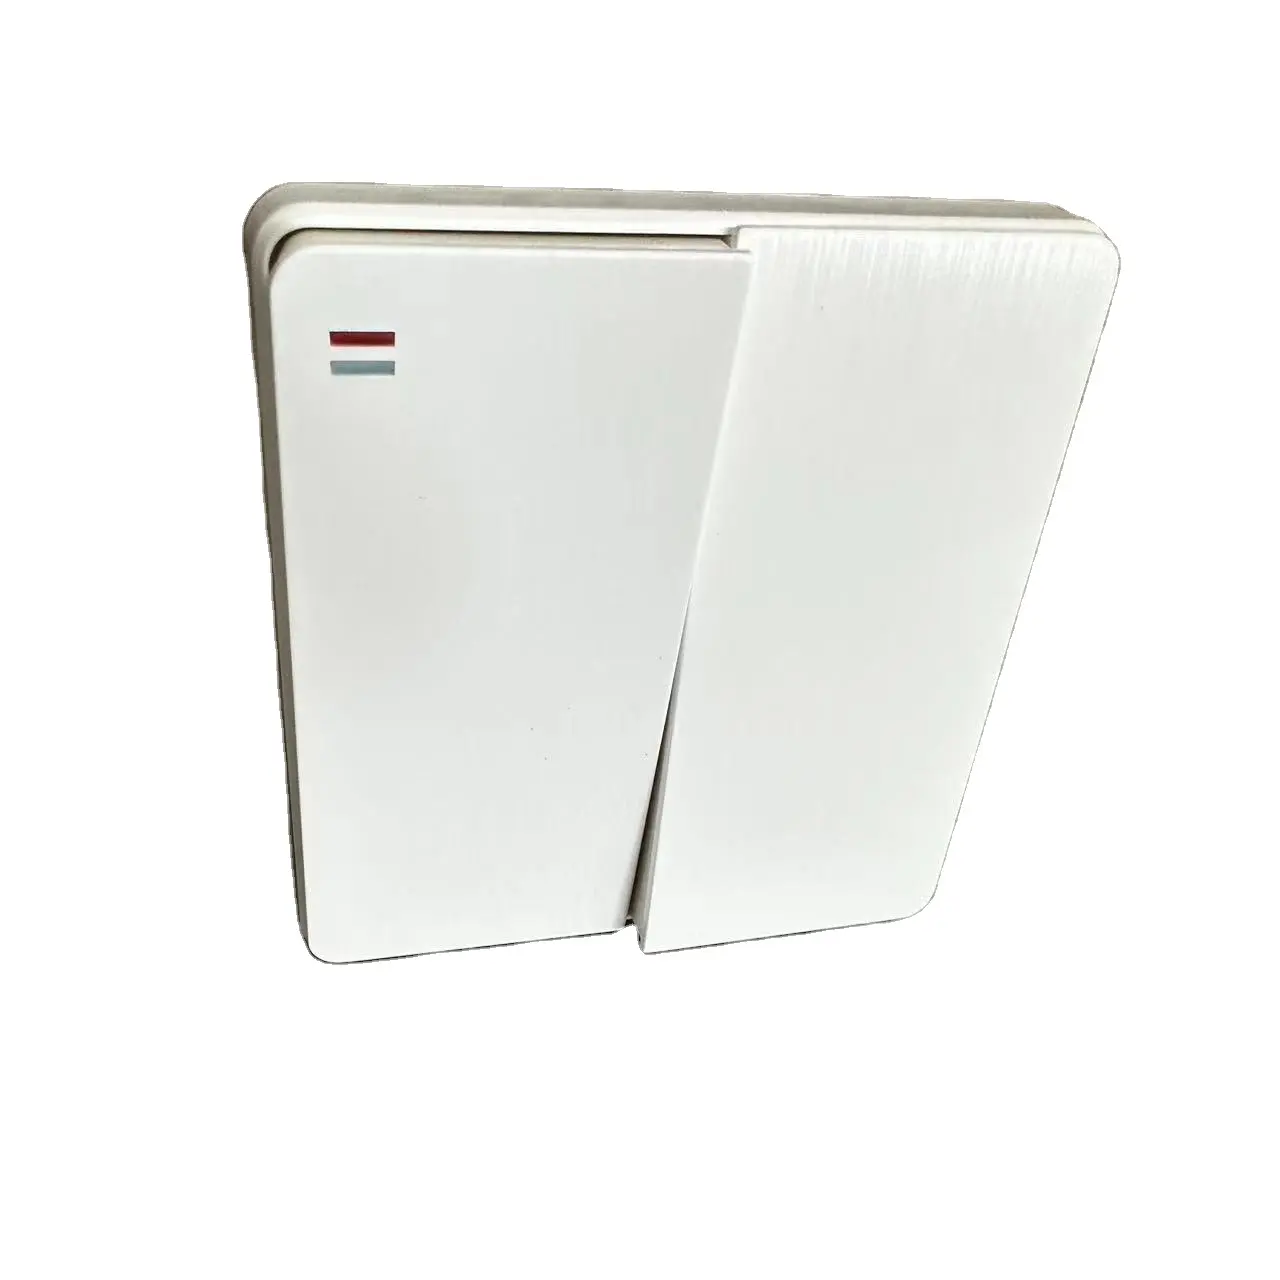 16A pc light switch power electric UK standard White brushed Big push panel 2 gang 1/2 way 250V wall switch 86*86mm